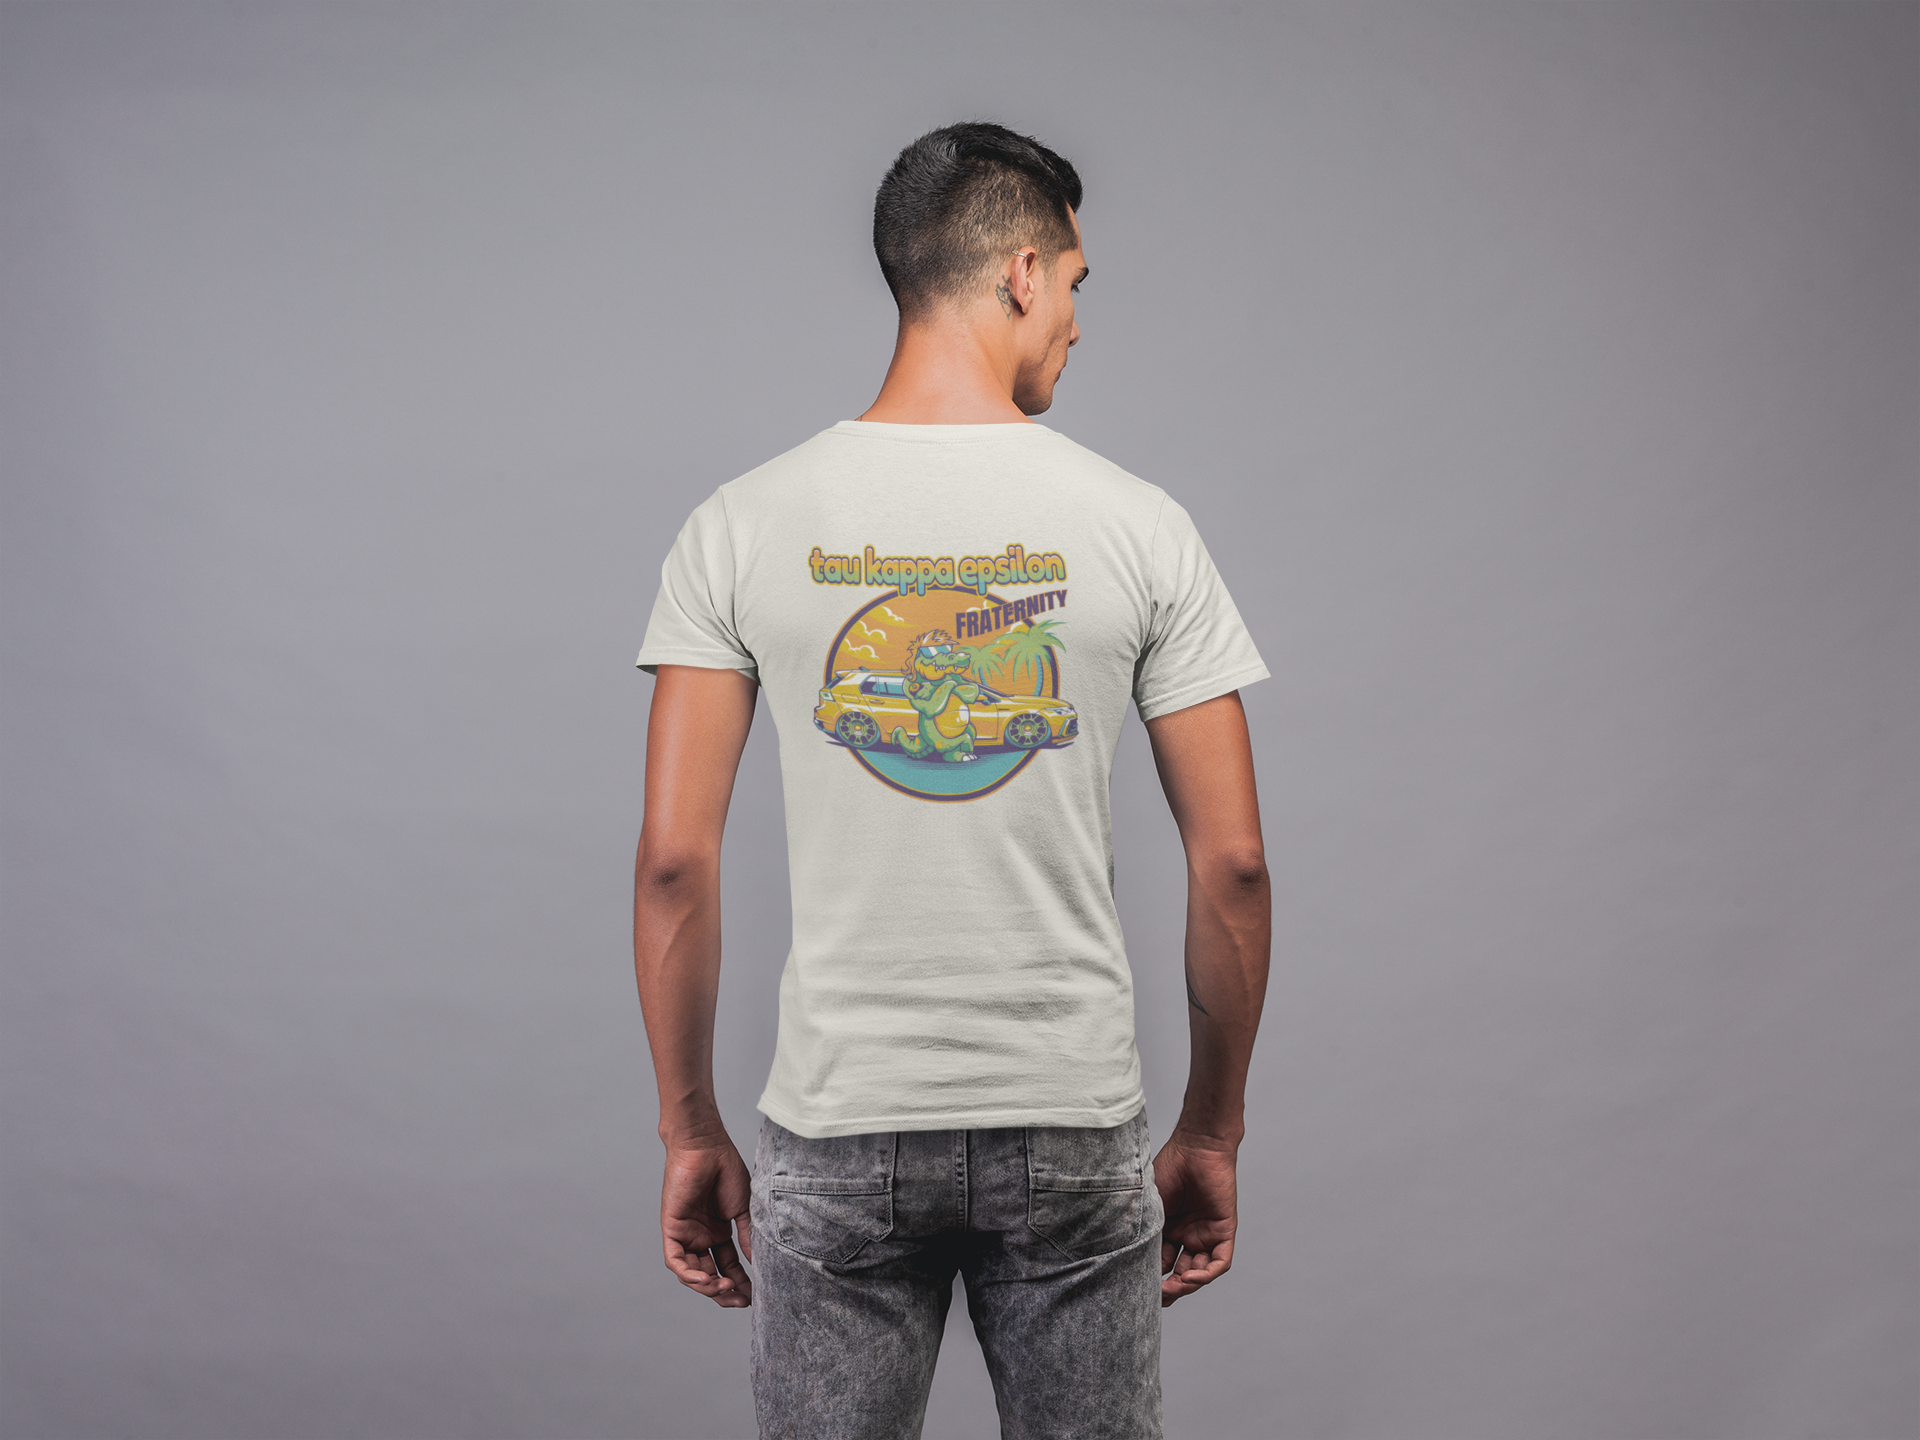 Tau Kappa Epsilon Graphic T-Shirt | Cool Croc | TKE Clothing and Merchandise model 